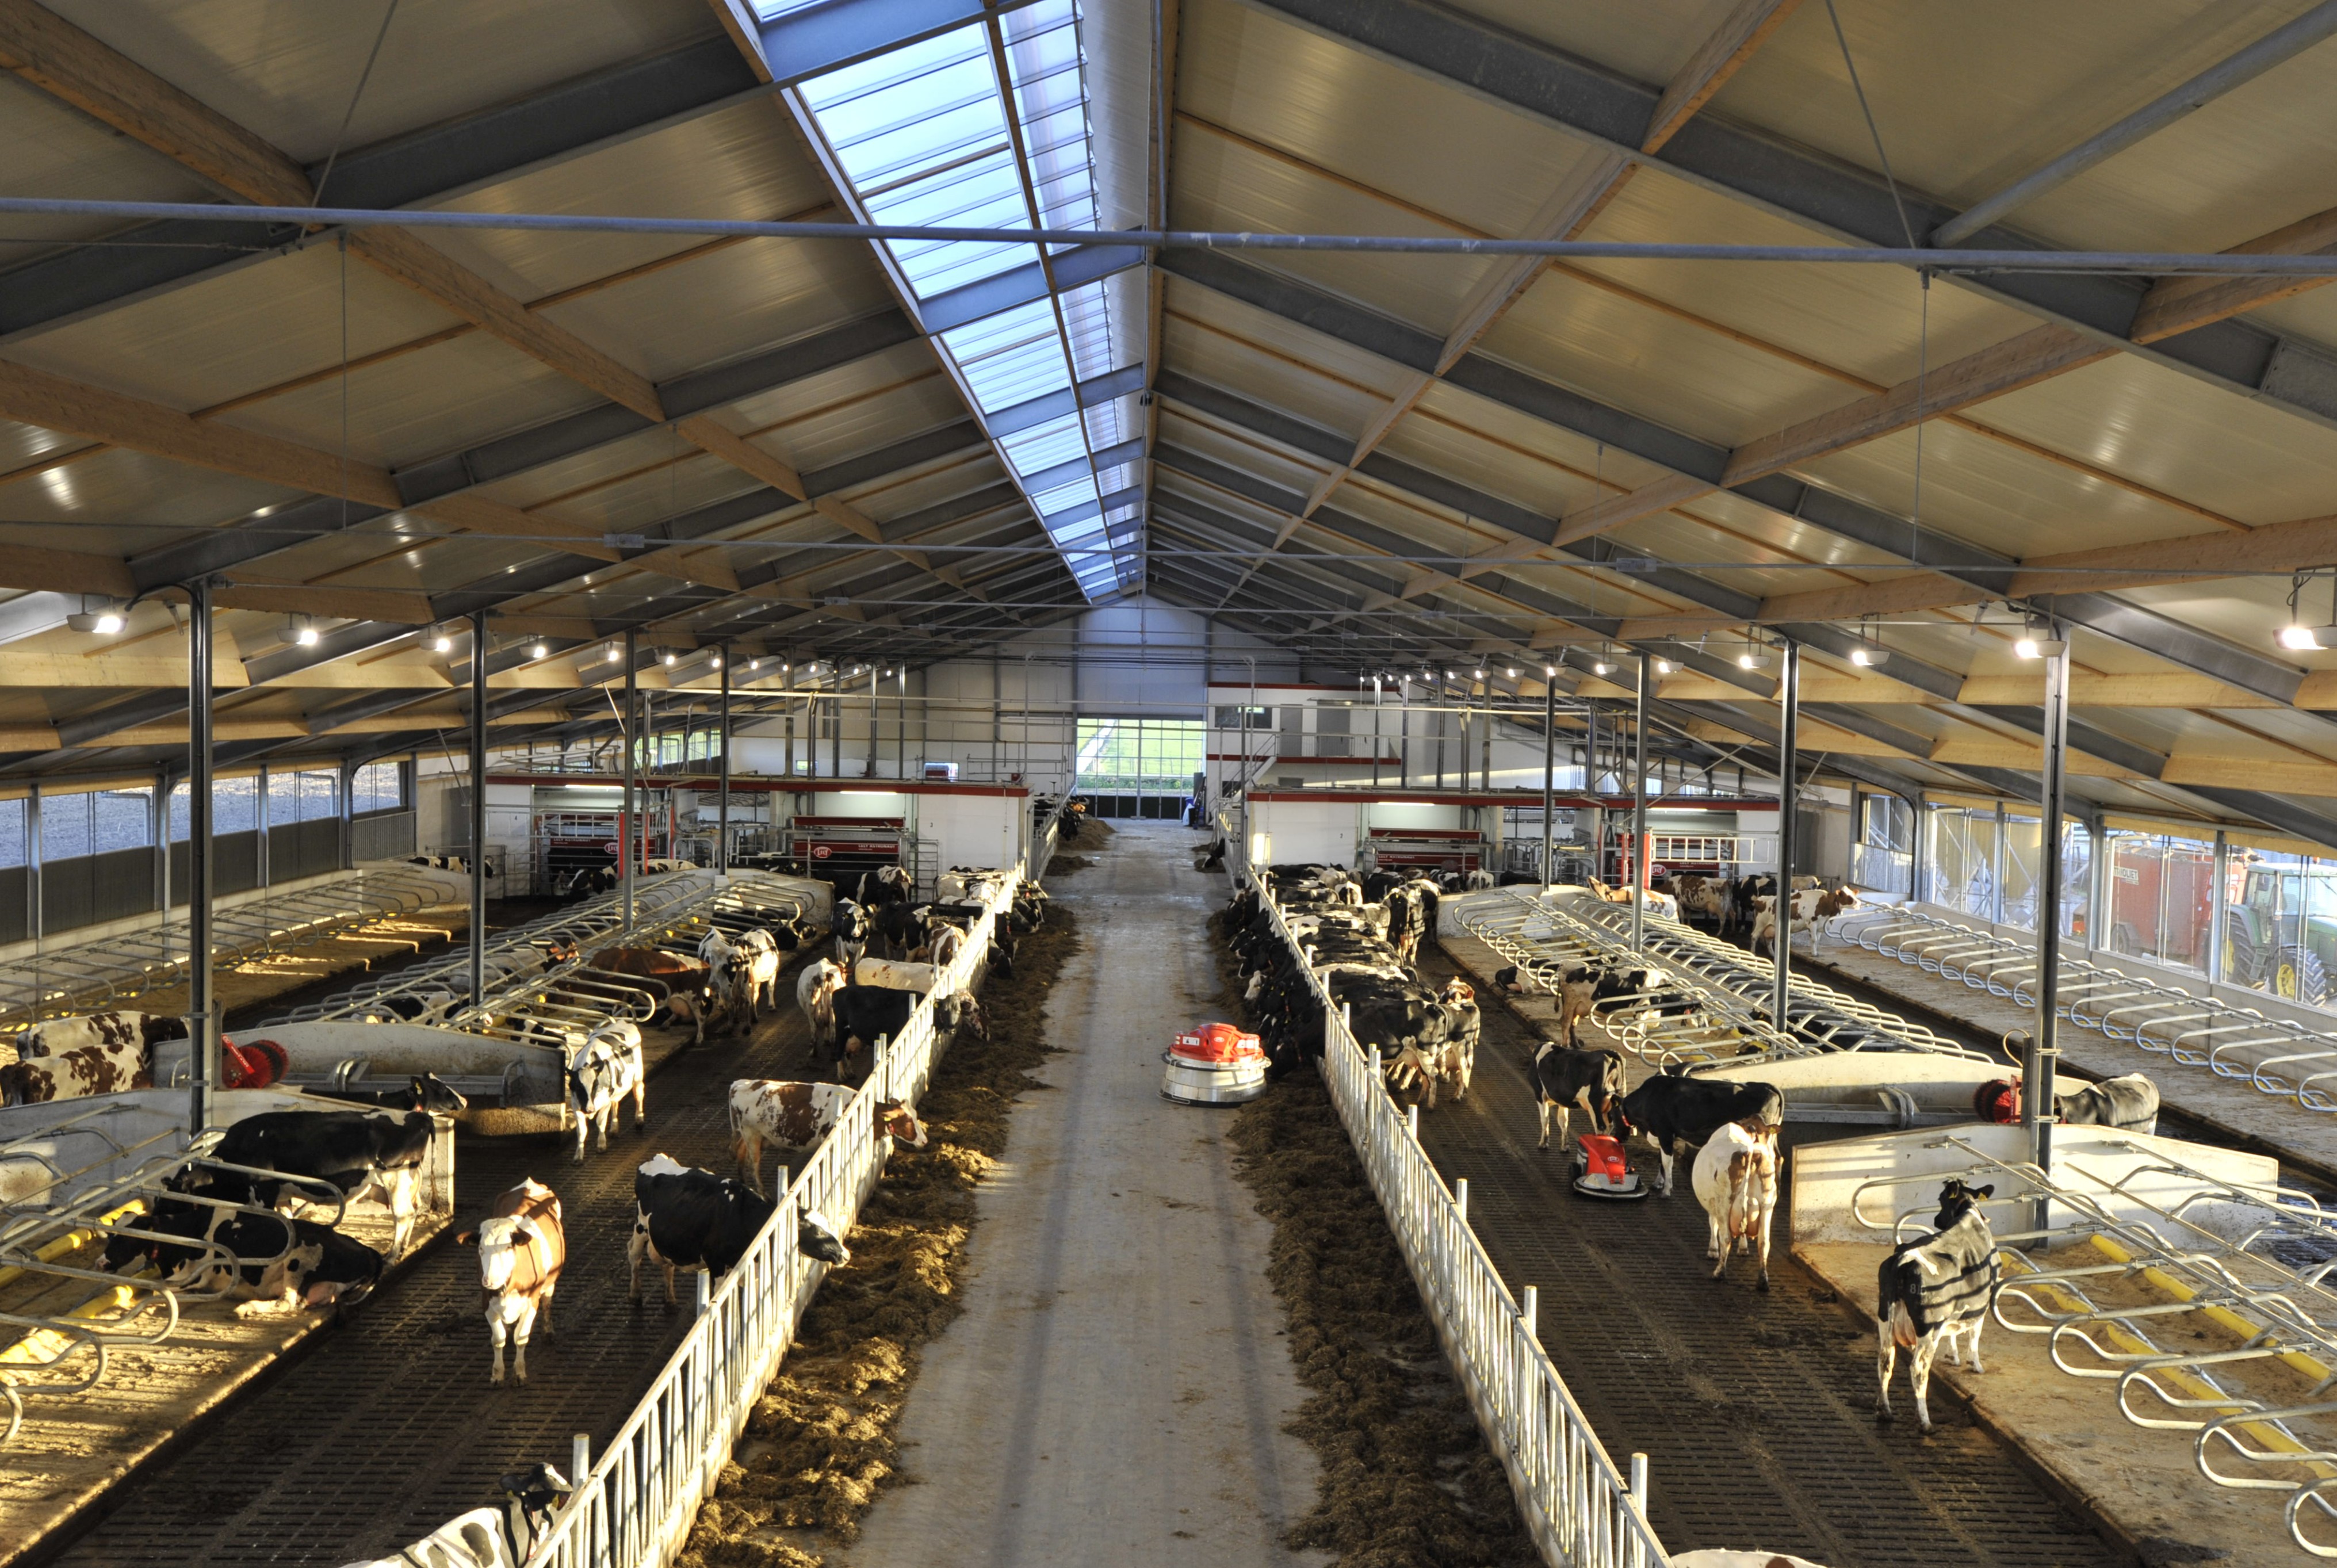 Dairy barn layout